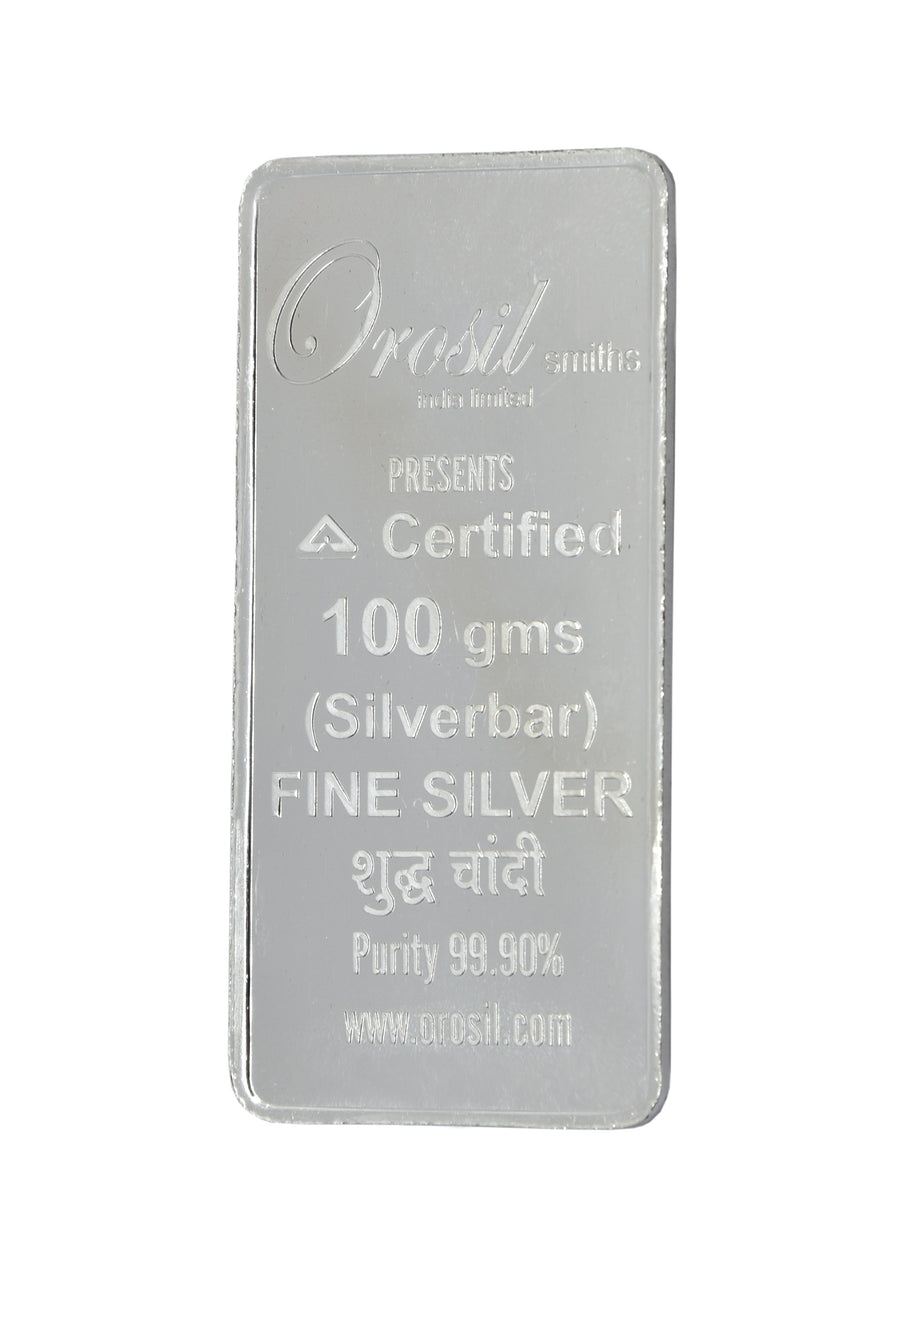 Silver Bar - 100 gm